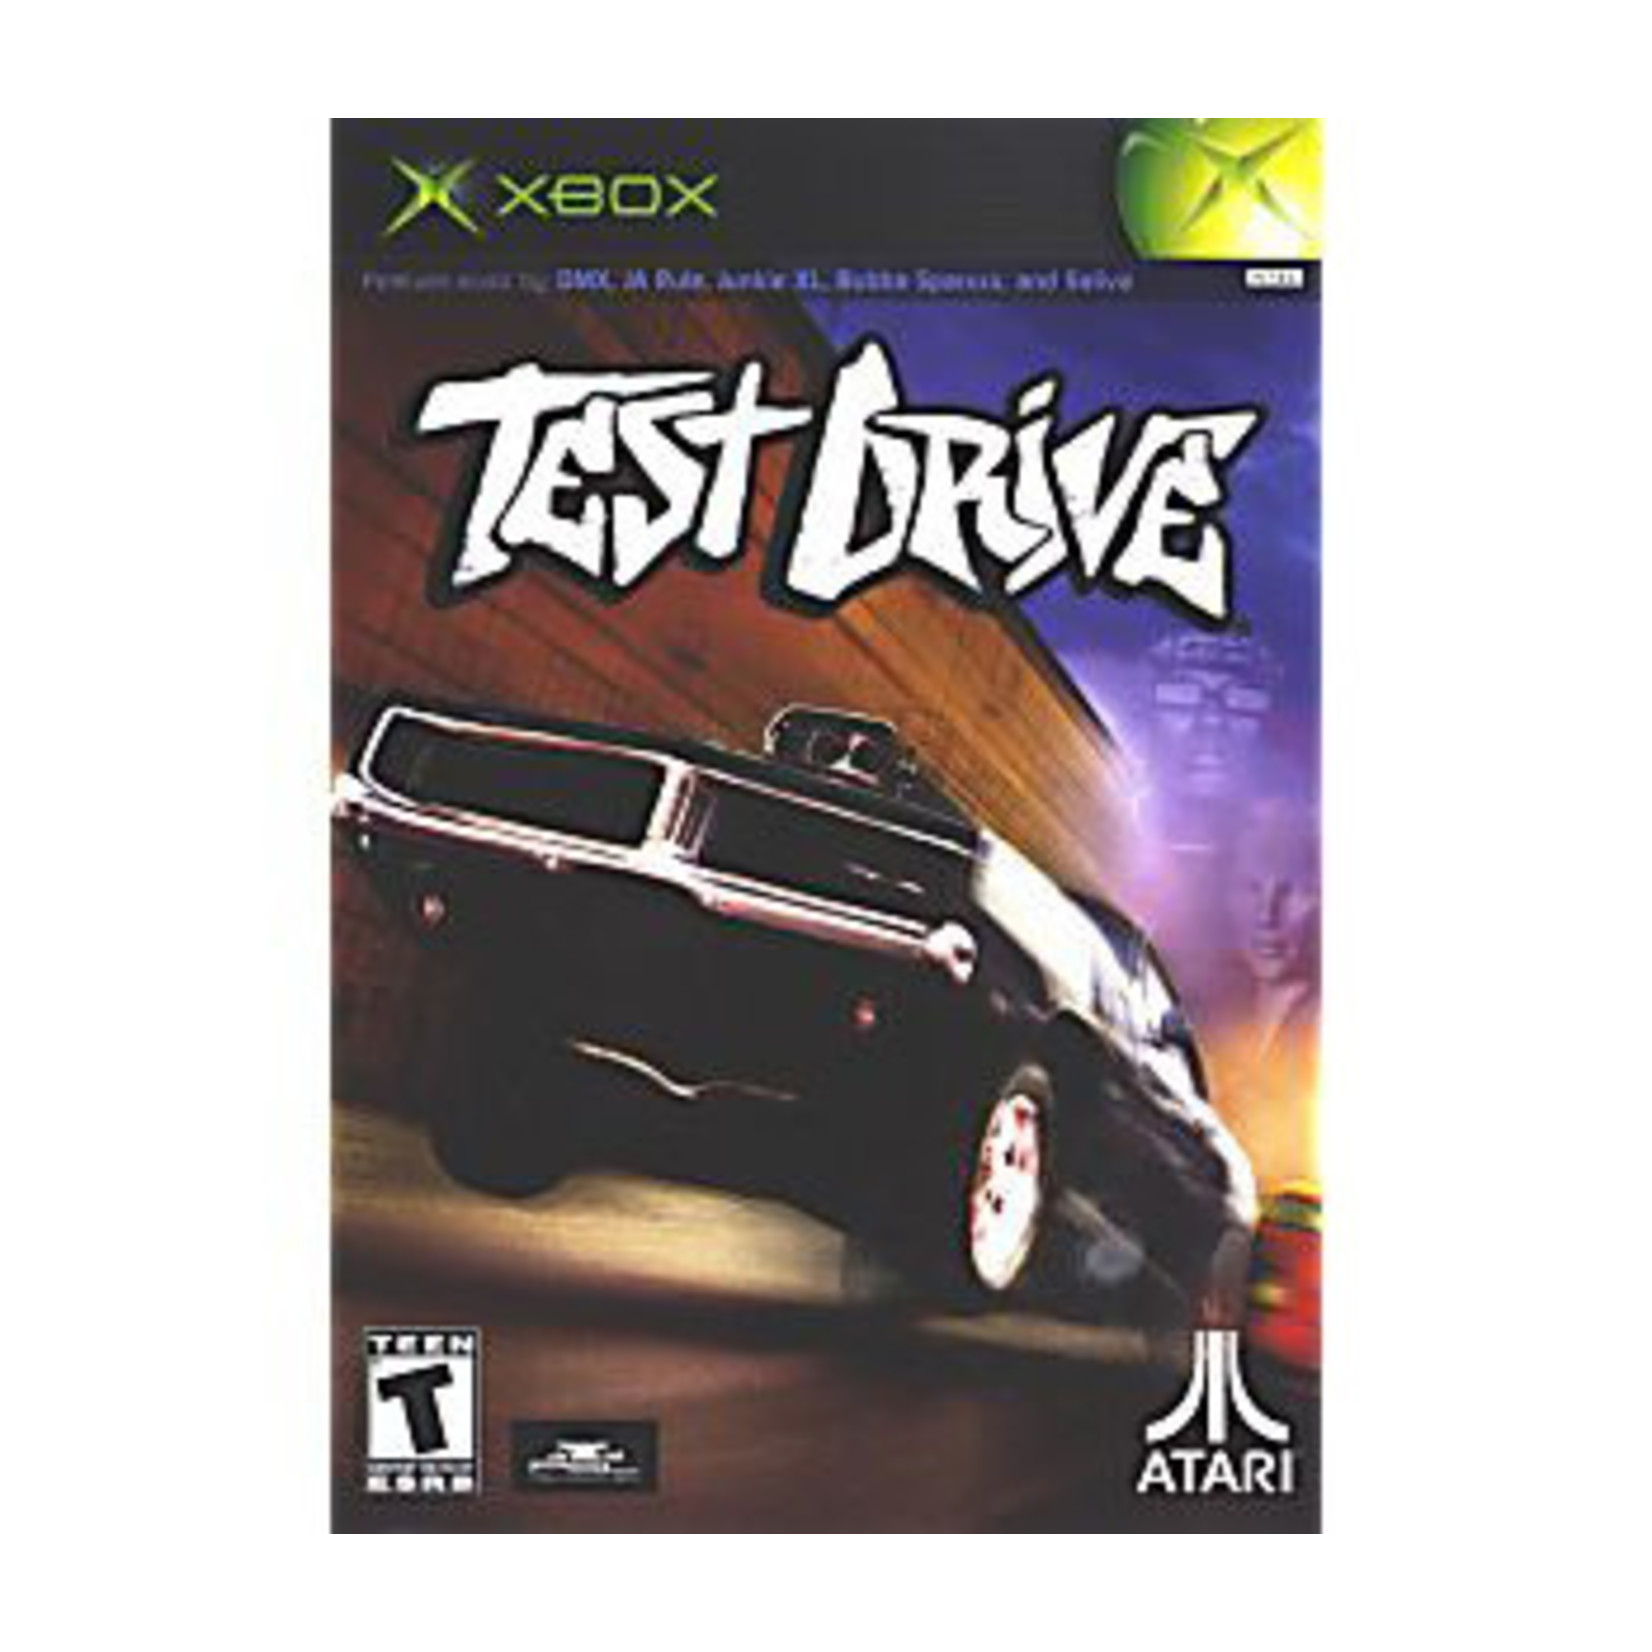 XBU-TEST DRIVE